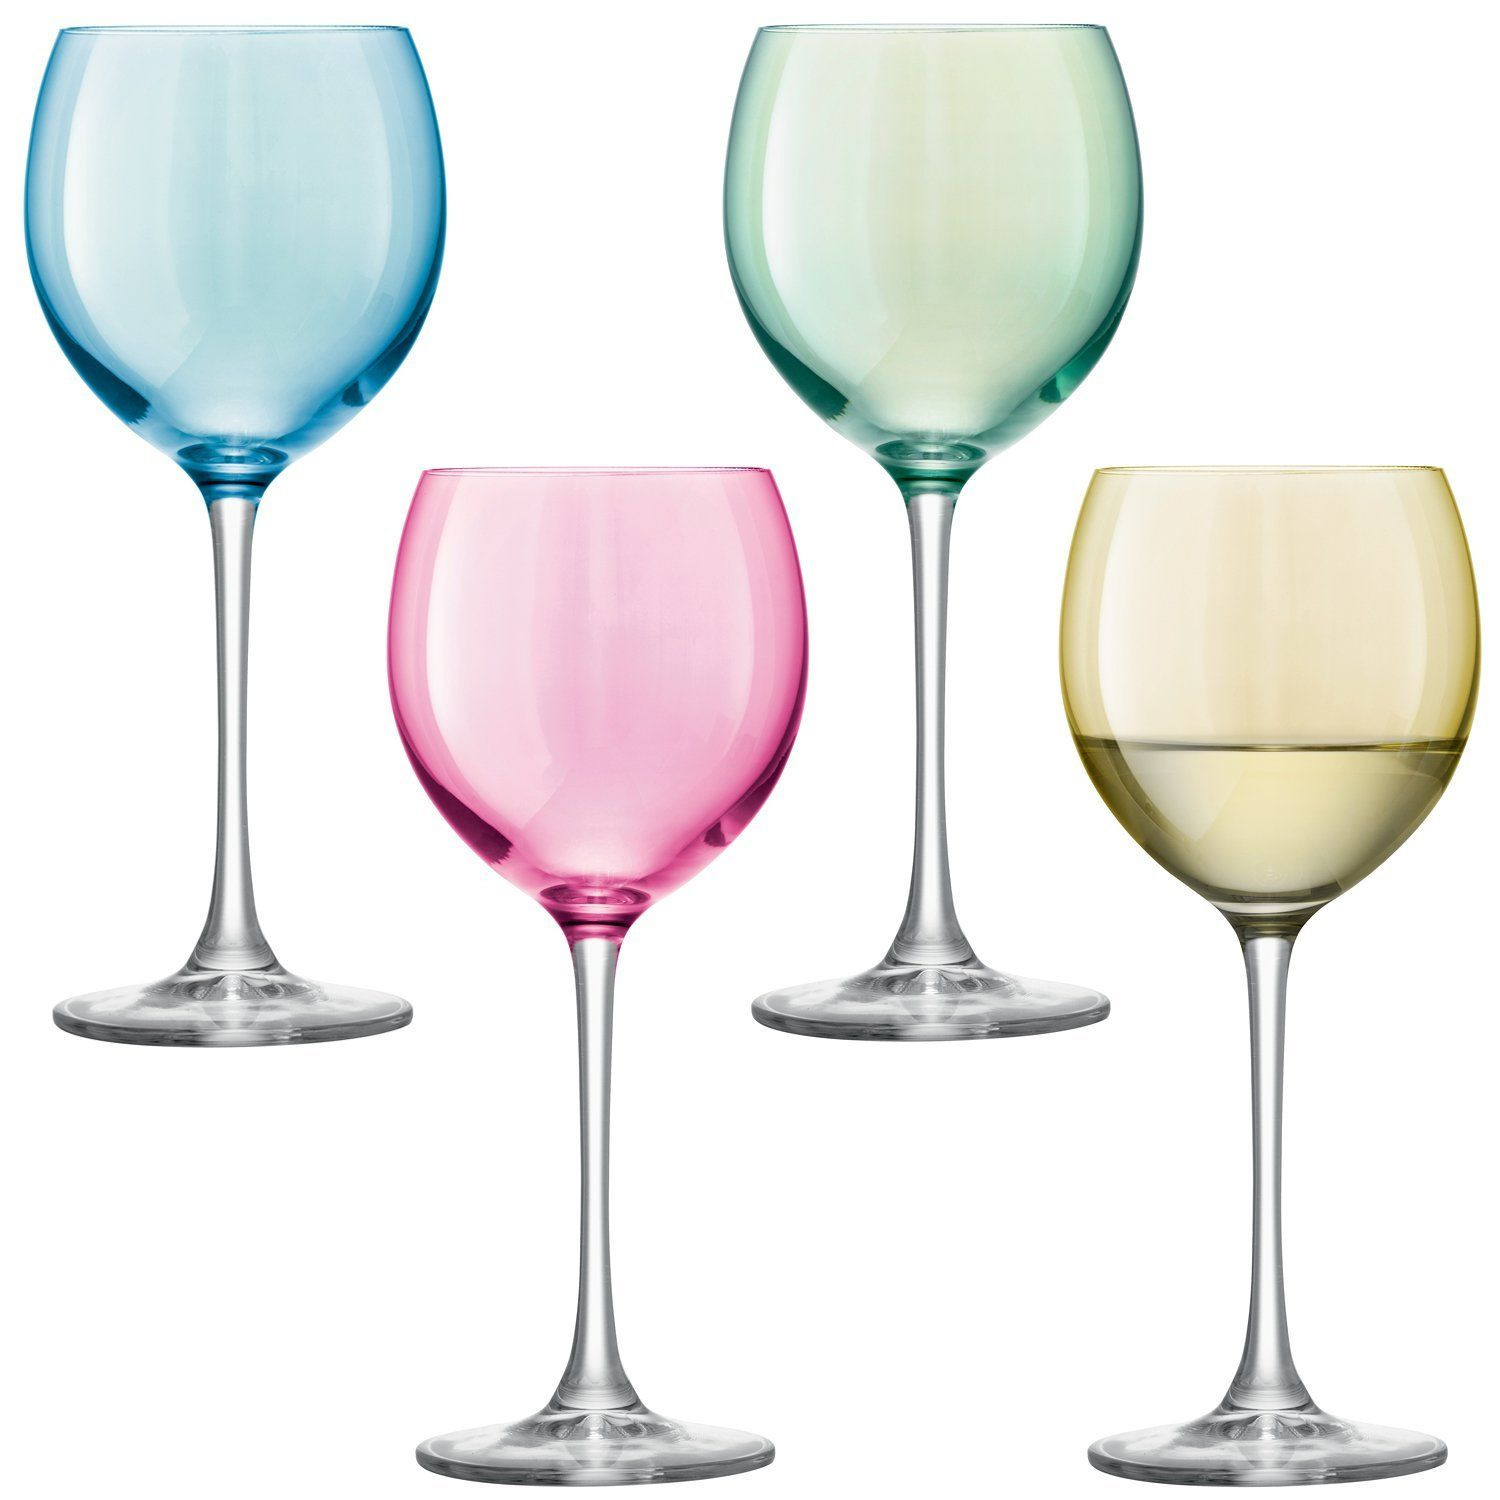 13 Wonderful Lsa Glass Vase 2024 free download lsa glass vase of lsa international polka handpainted set of 4 wine glasses g932 14 inside lsa international polka handpainted set of 4 wine glasses g932 14 294